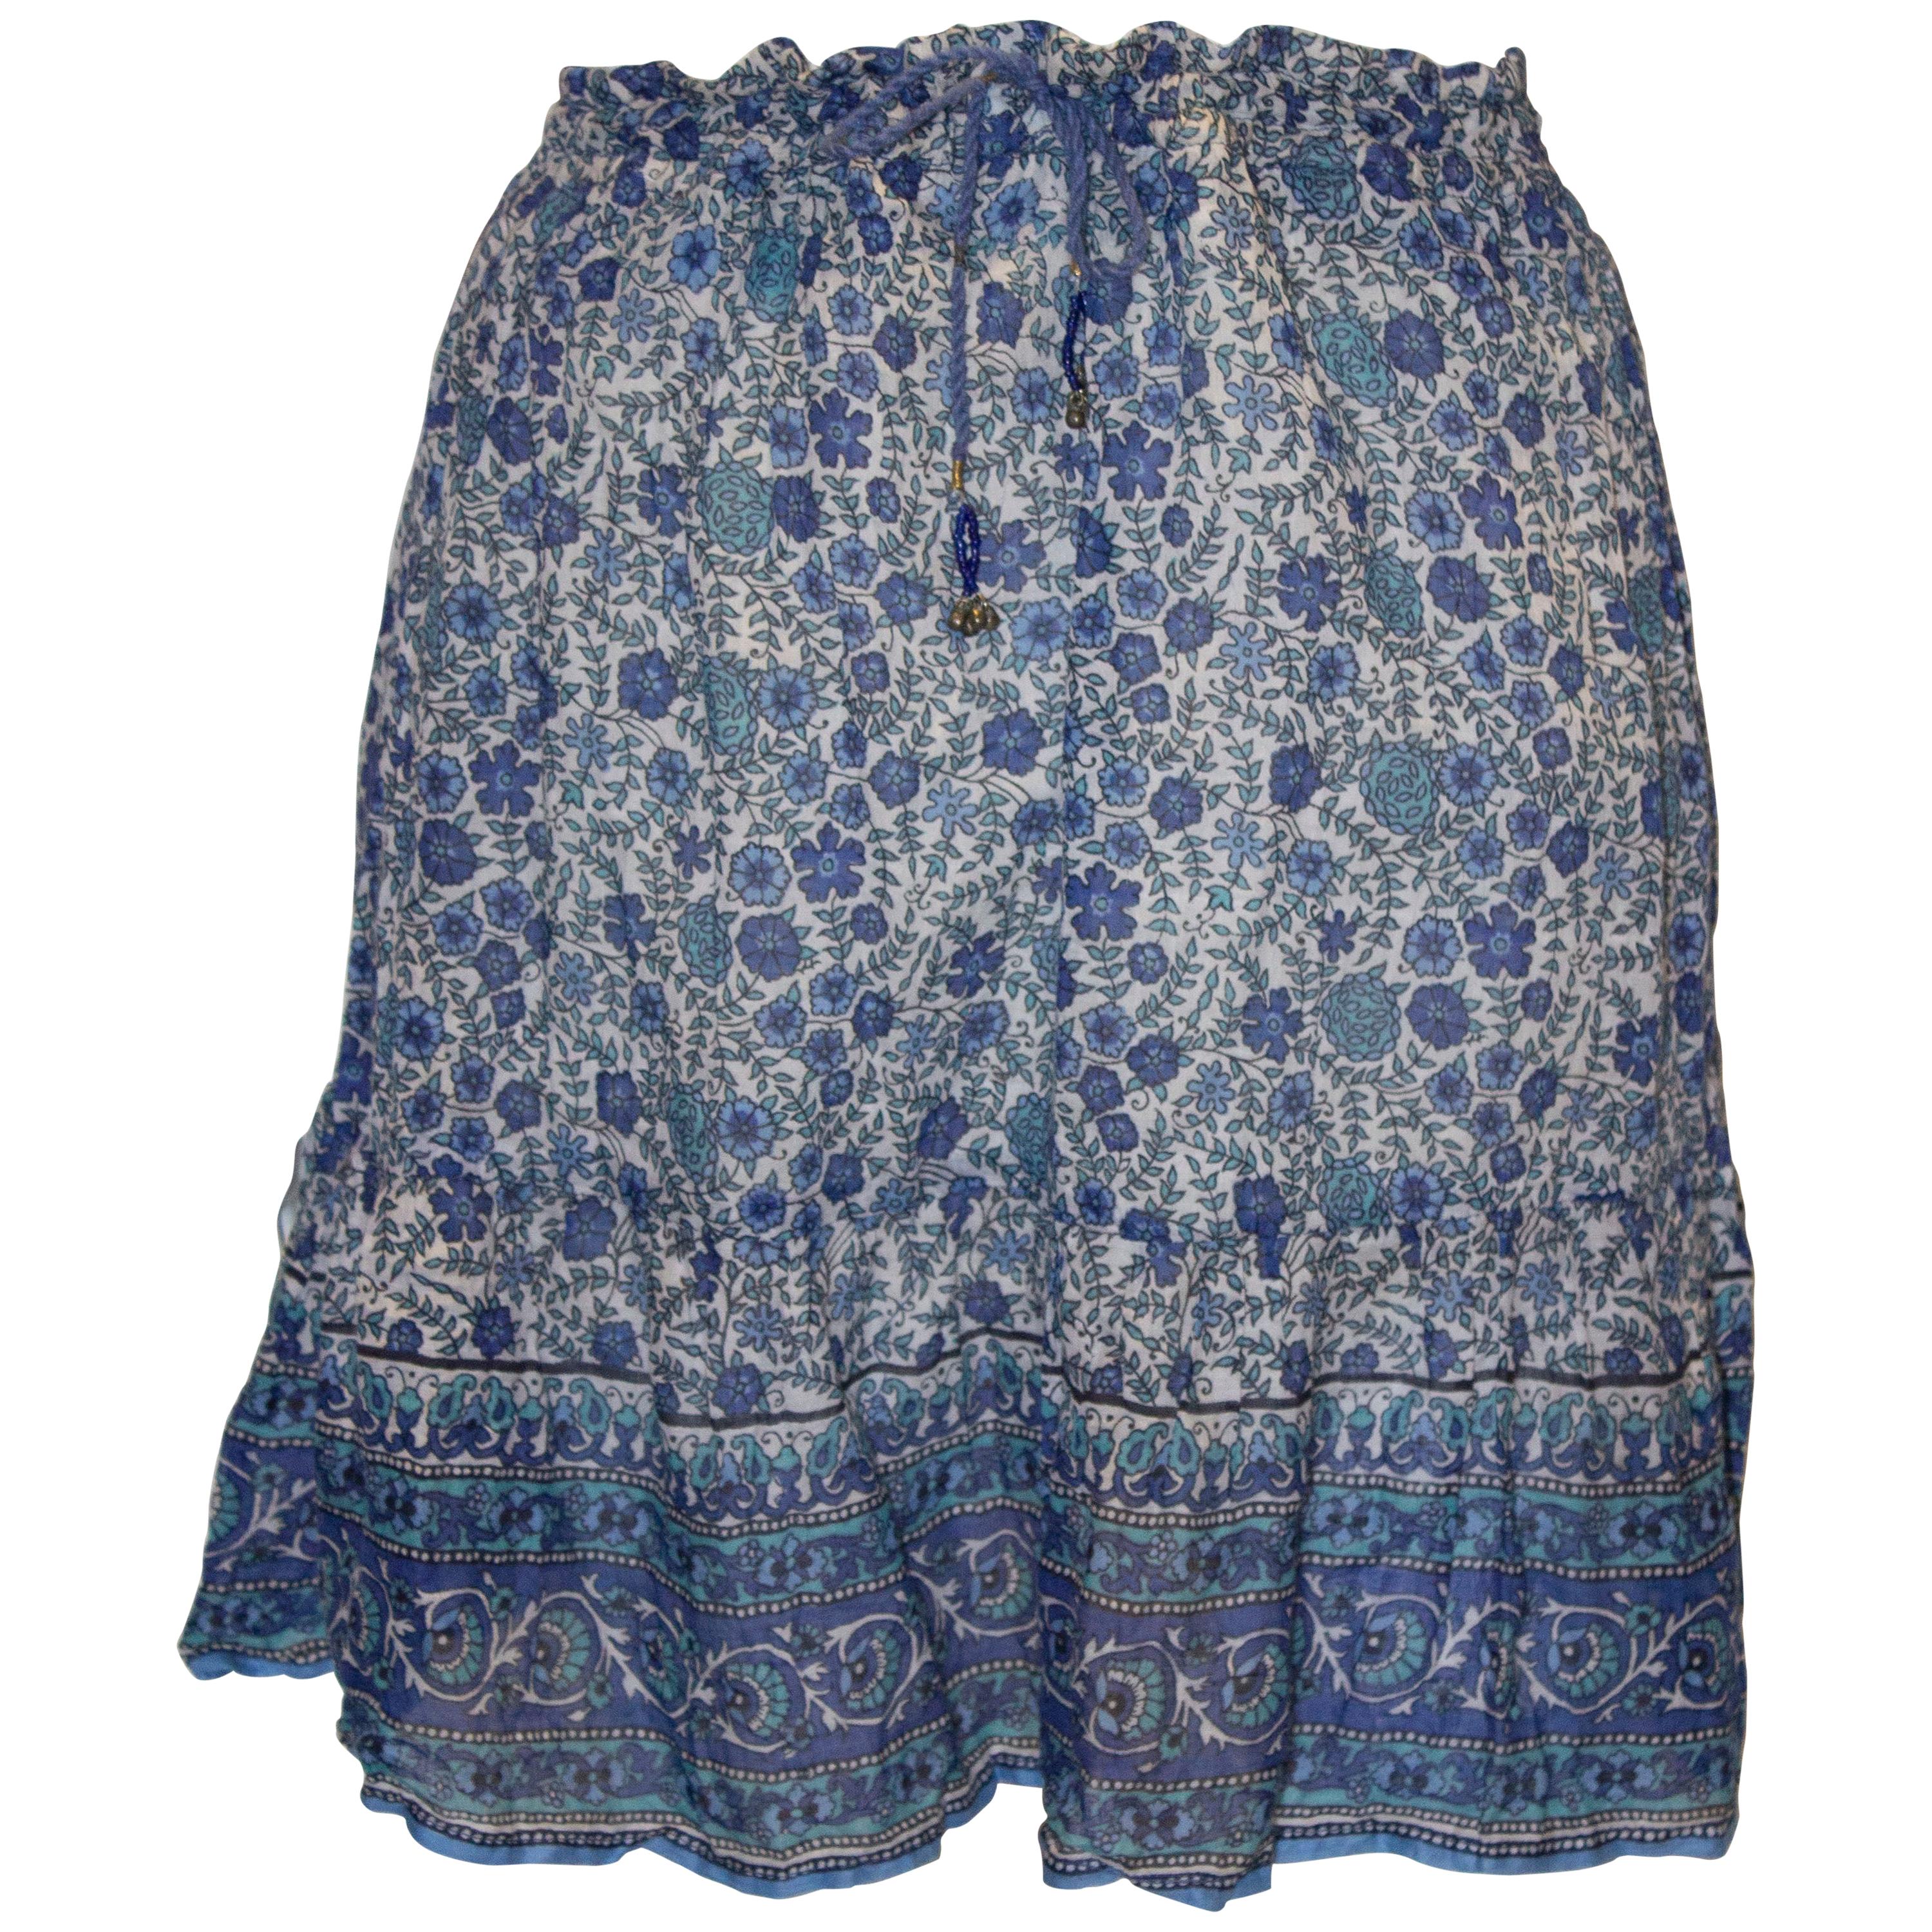 Vintage Indian Cotton Skirt For Sale